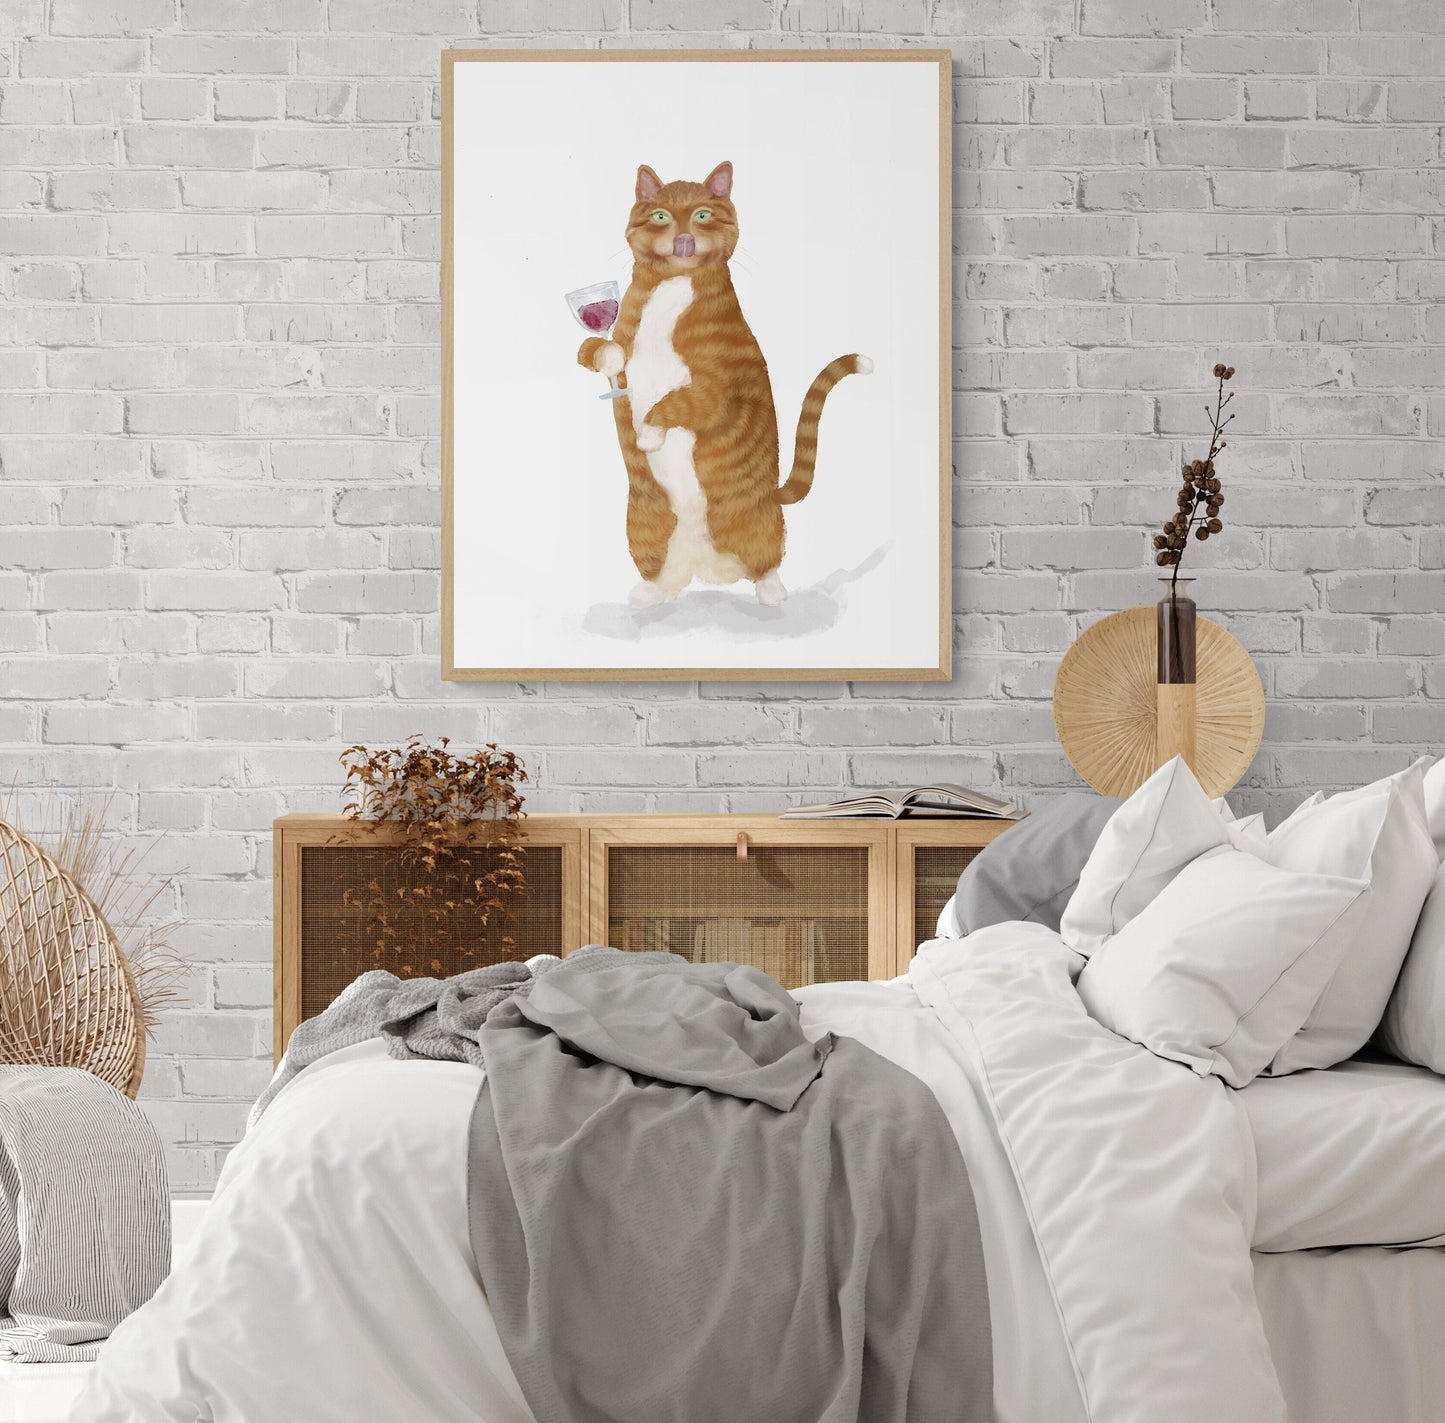 Orange and White Tabby Cat With Wine Art Print